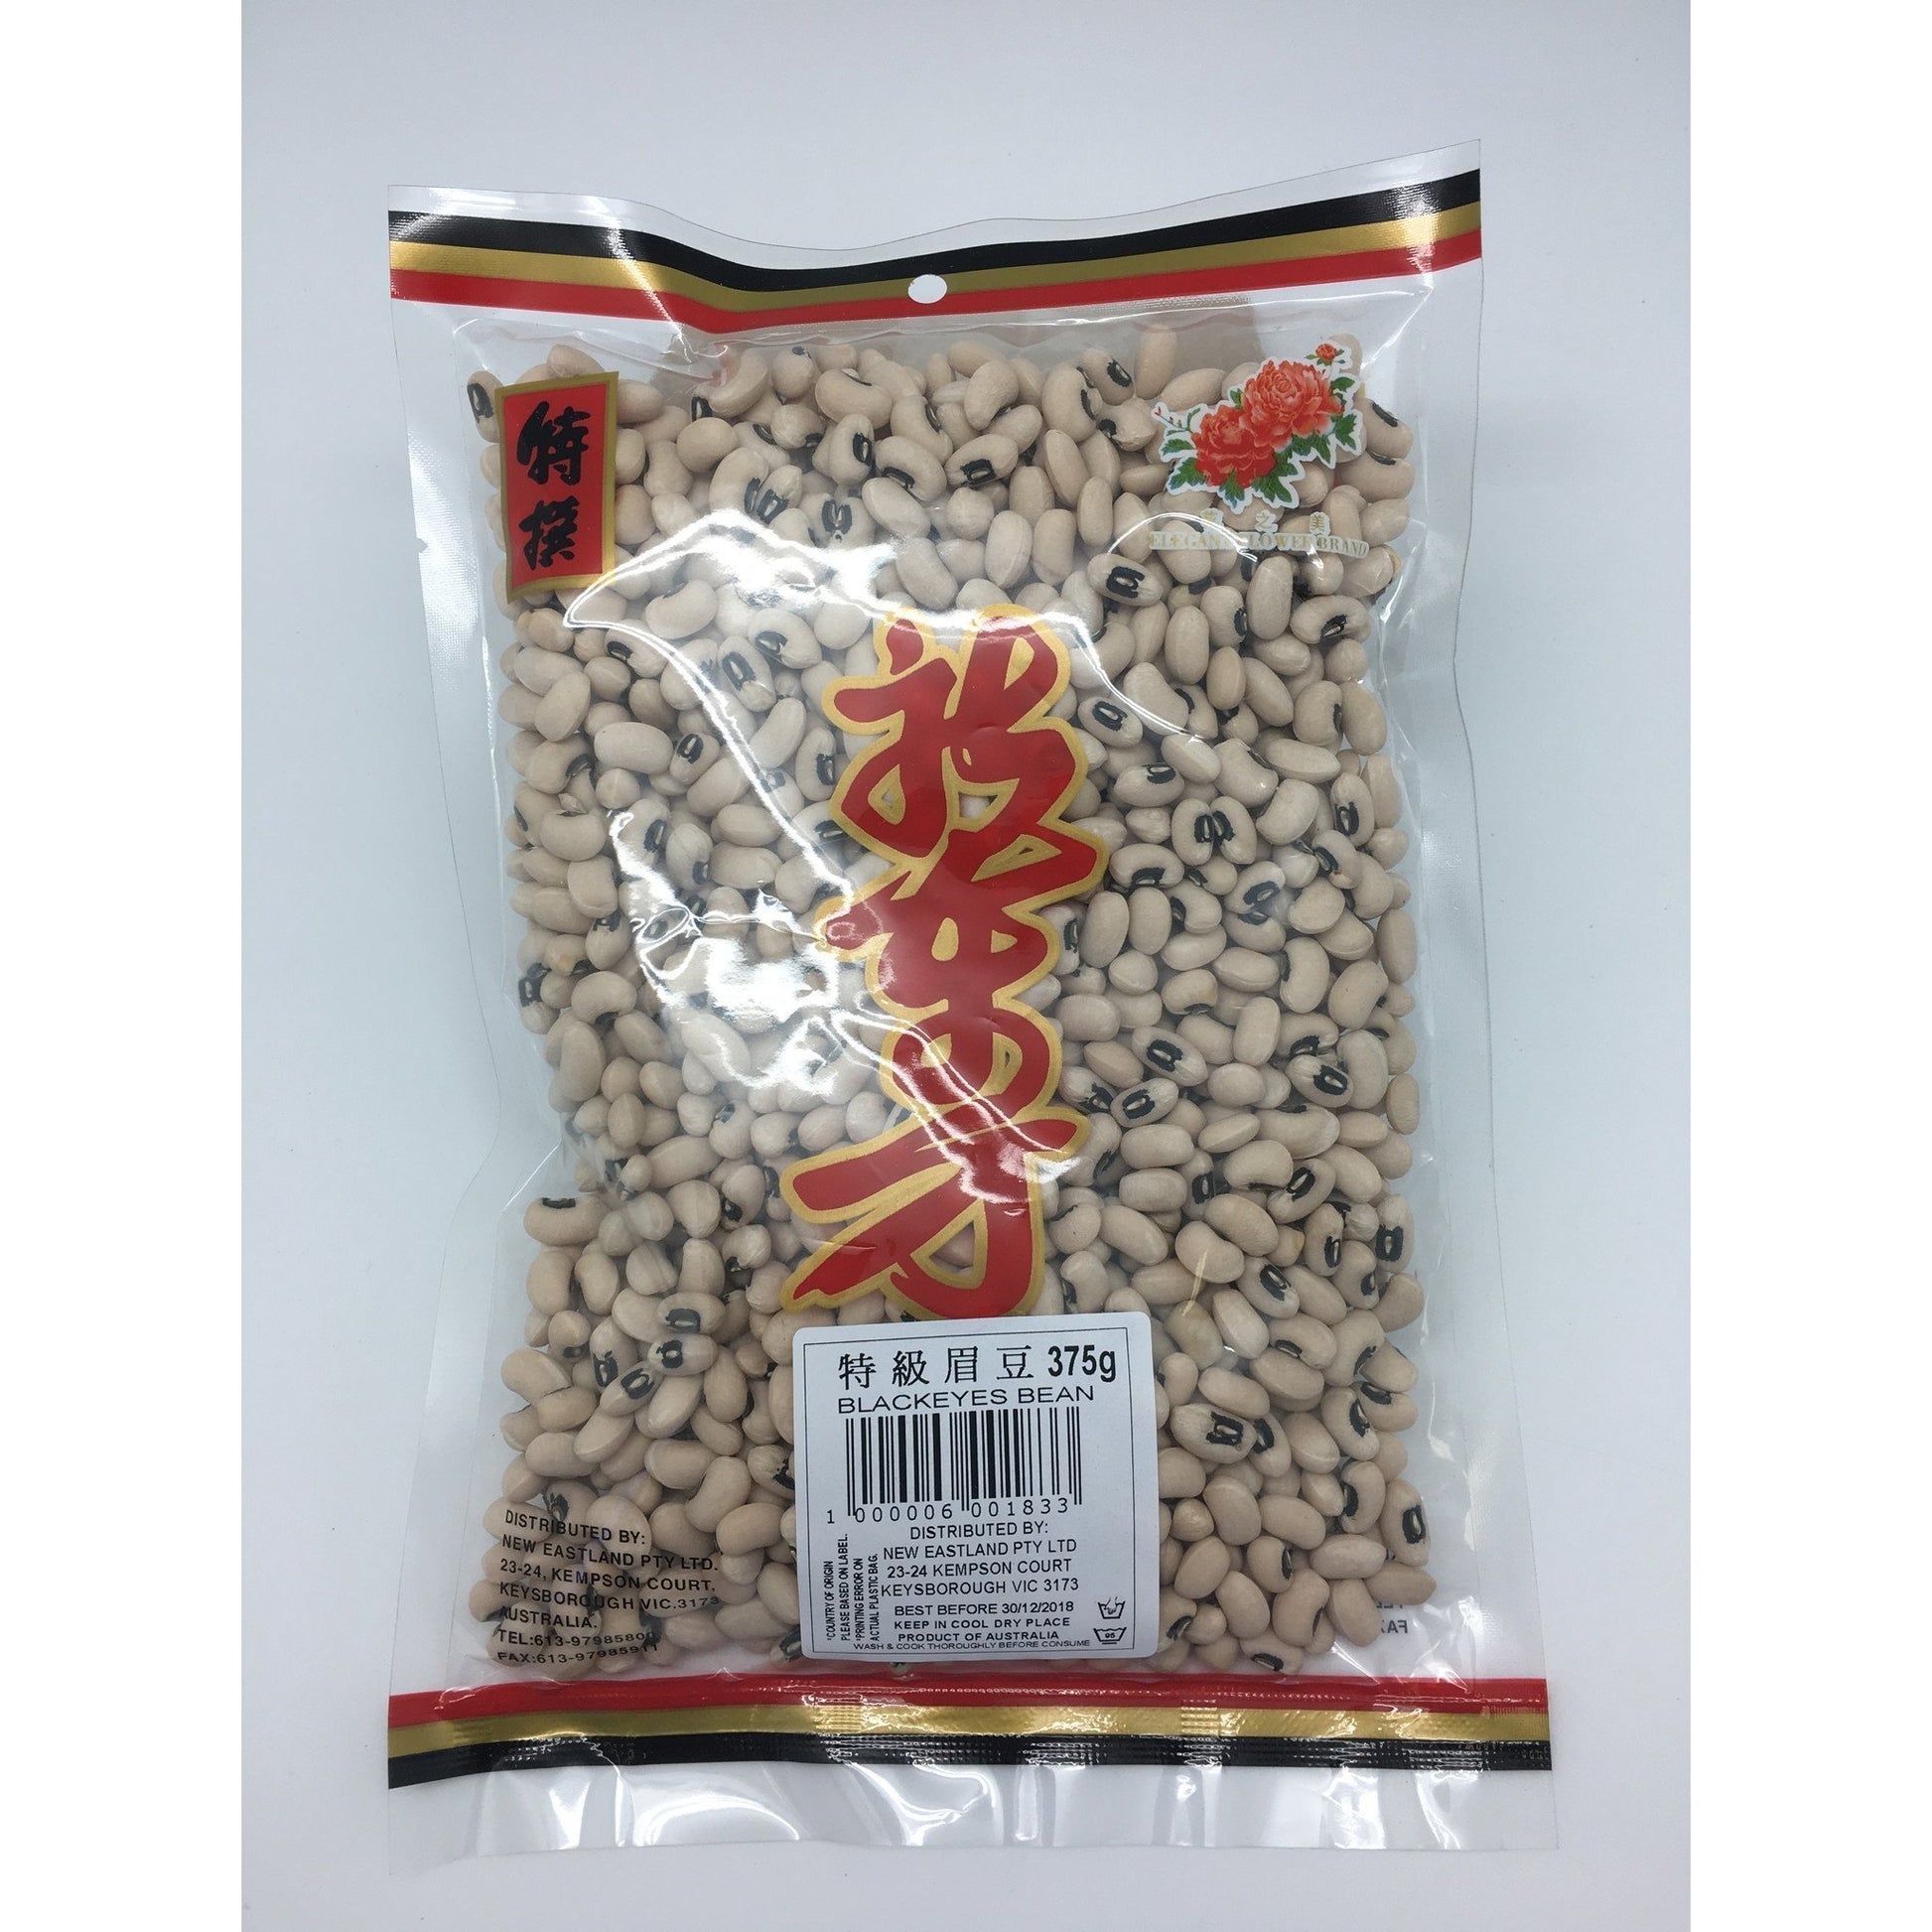 D183S New Eastland Brand - Blackeyes Beans 375g - 40 bags / 1 CTN - New Eastland Pty Ltd - Asian food wholesalers